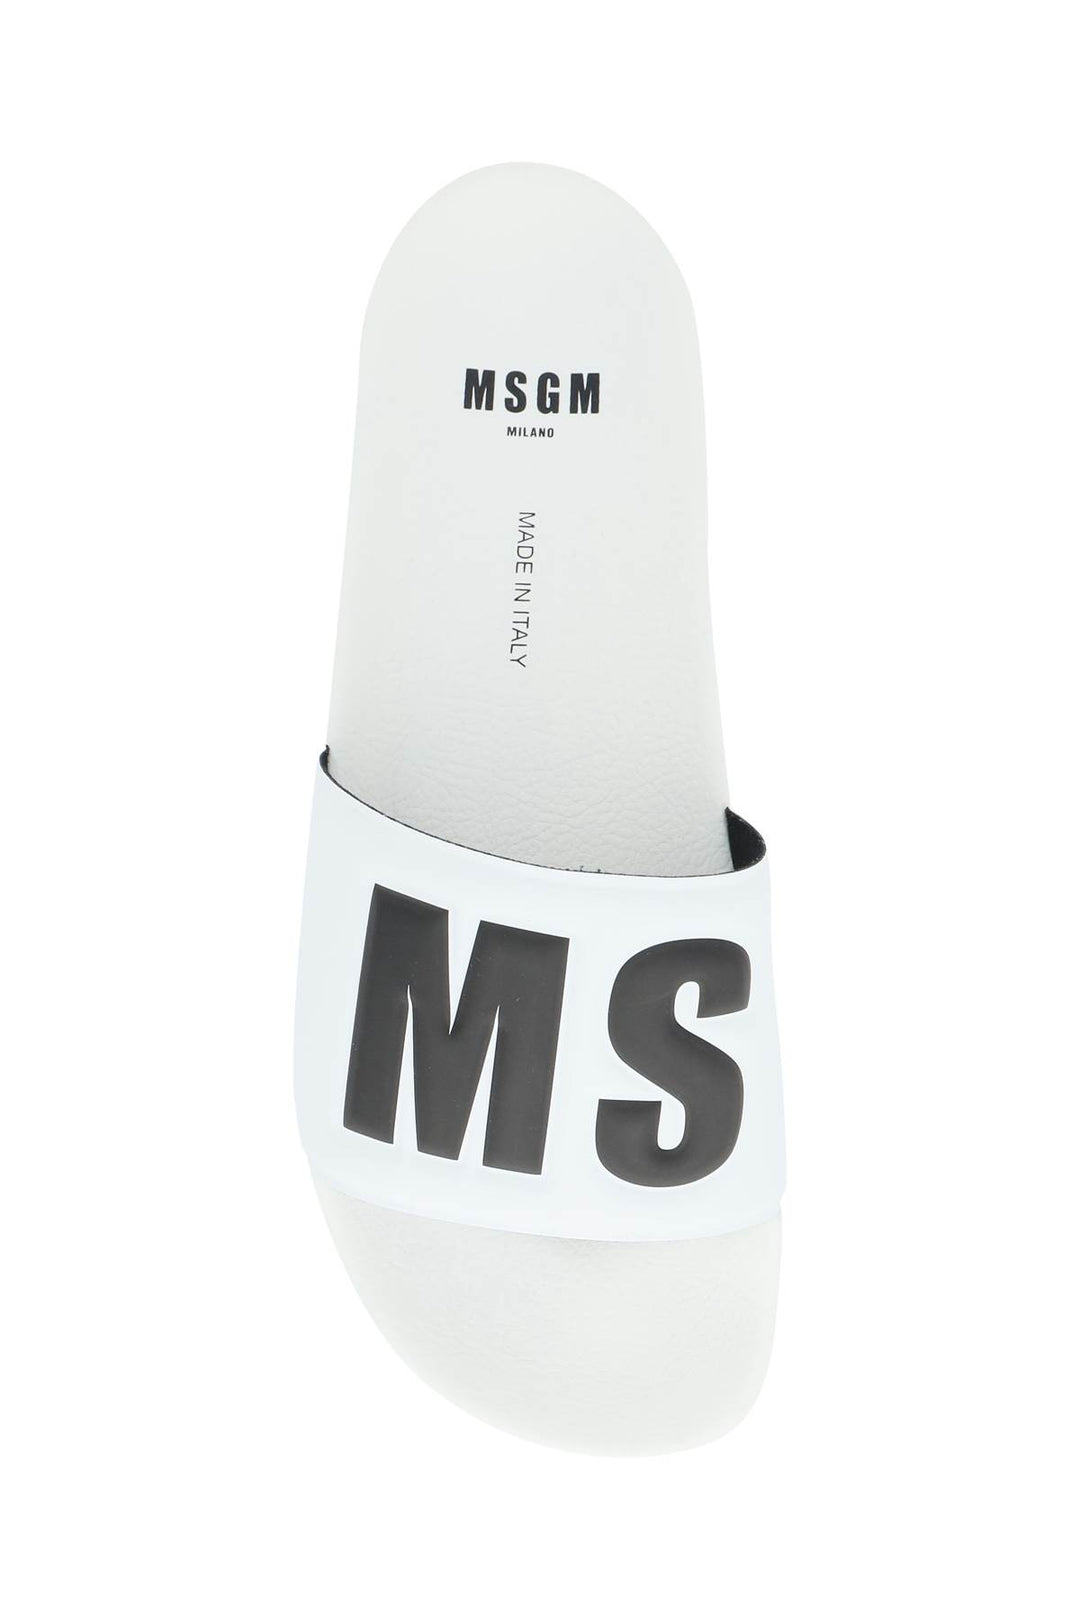 Msgm Logo Slides   Bianco